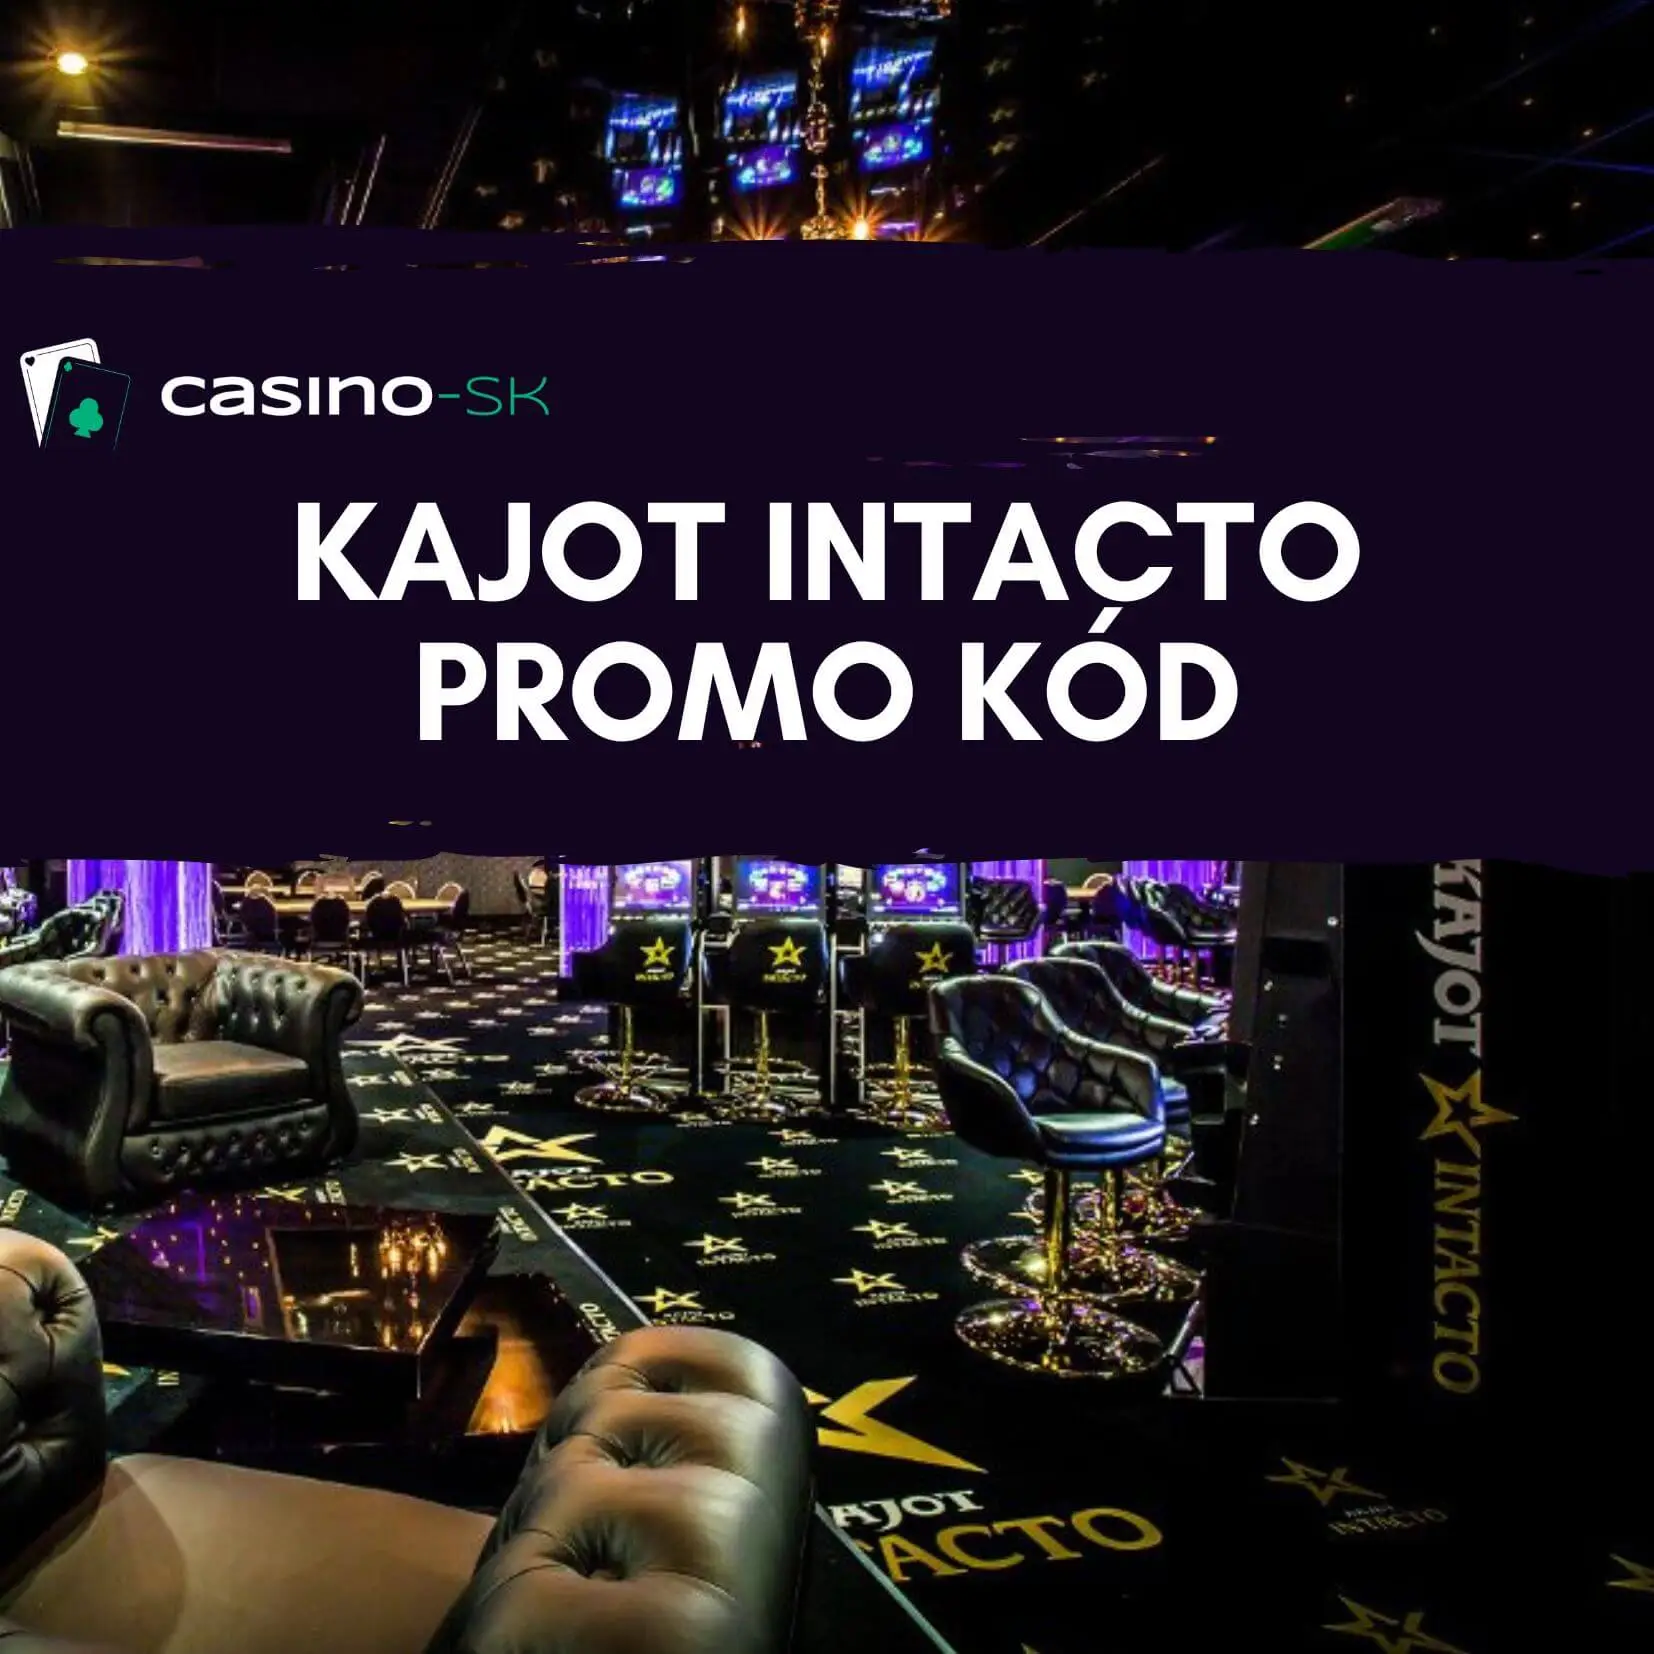 Kajot Intacto casino promo kod